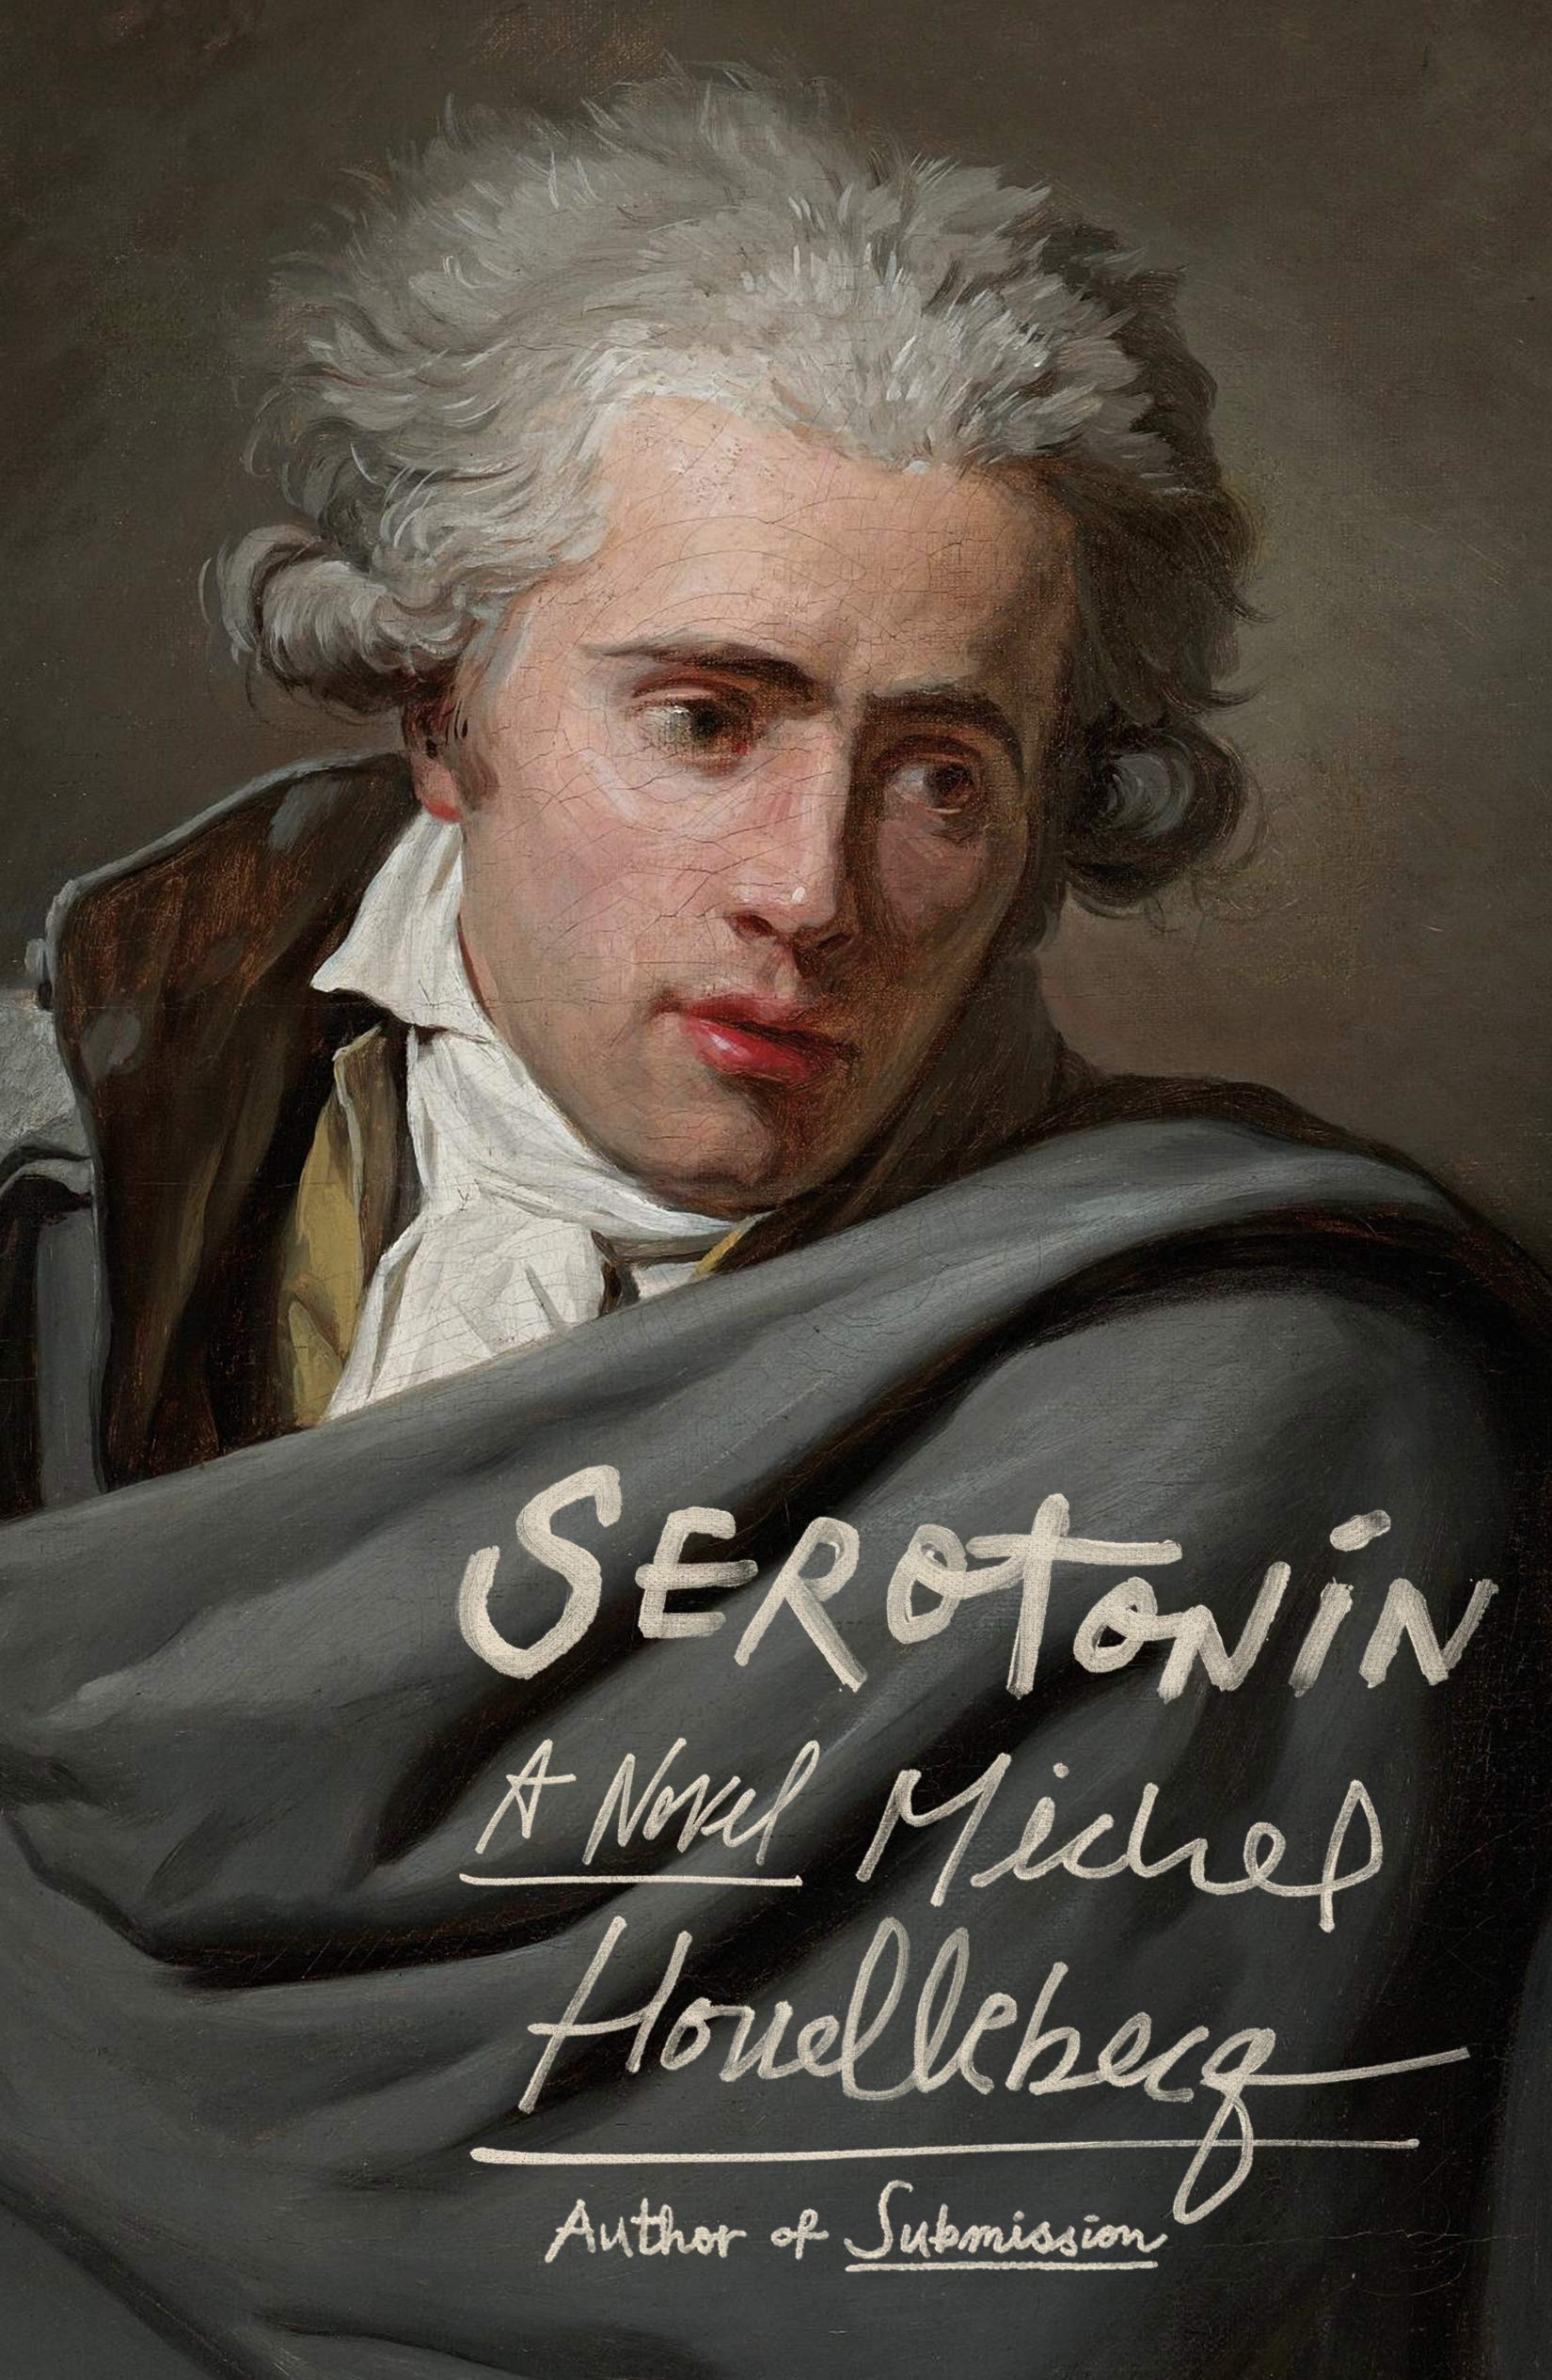 The cover of Serotonin